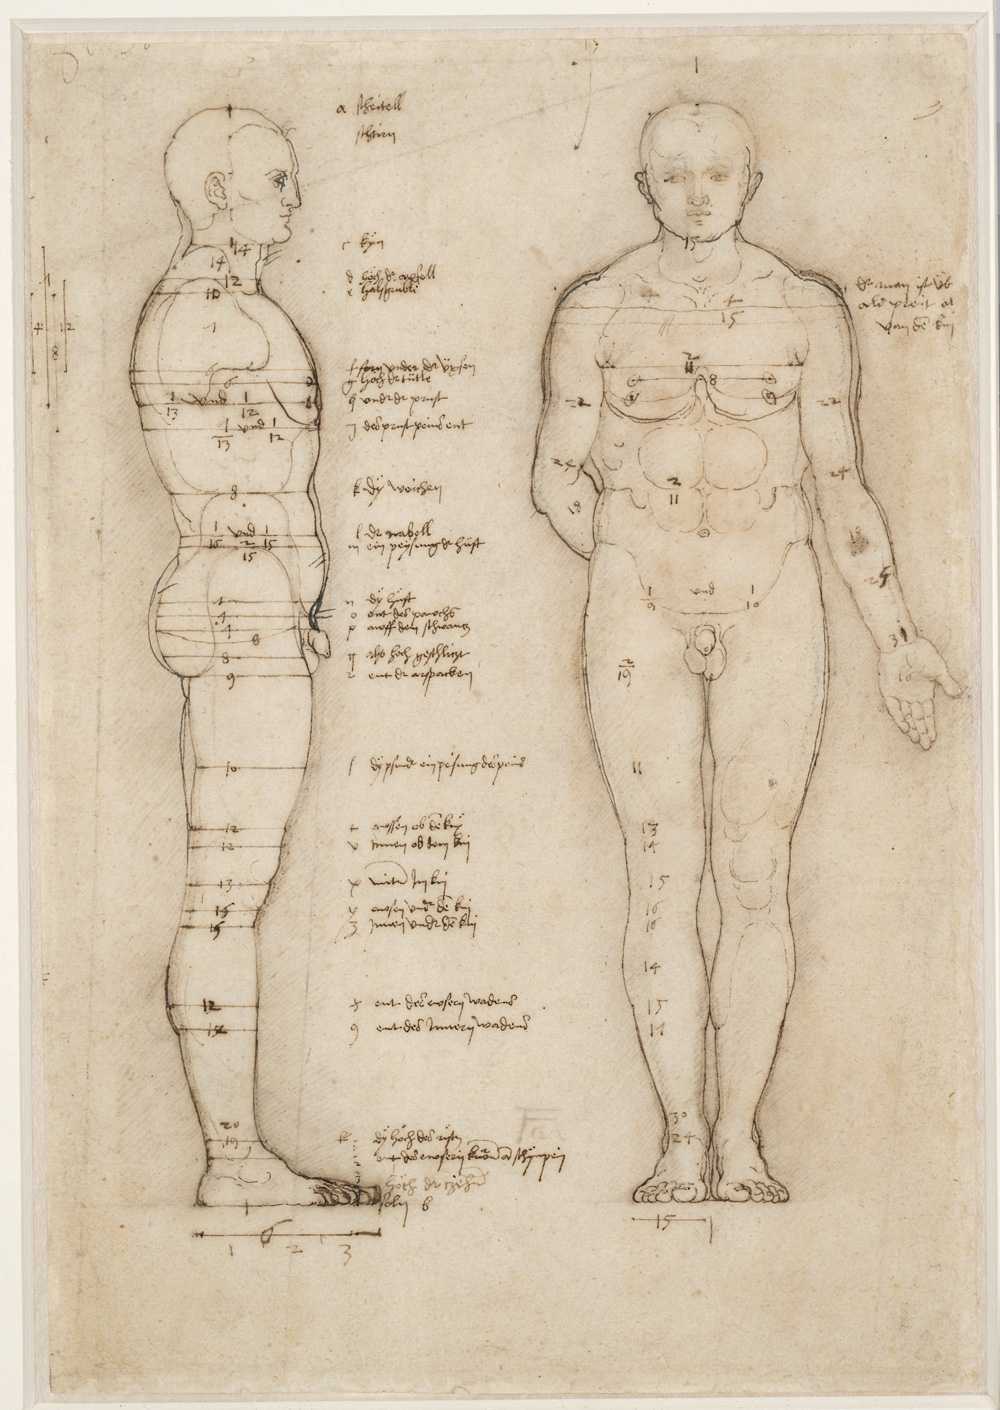 Albrecht Dürer's Sketches on Human Proportions